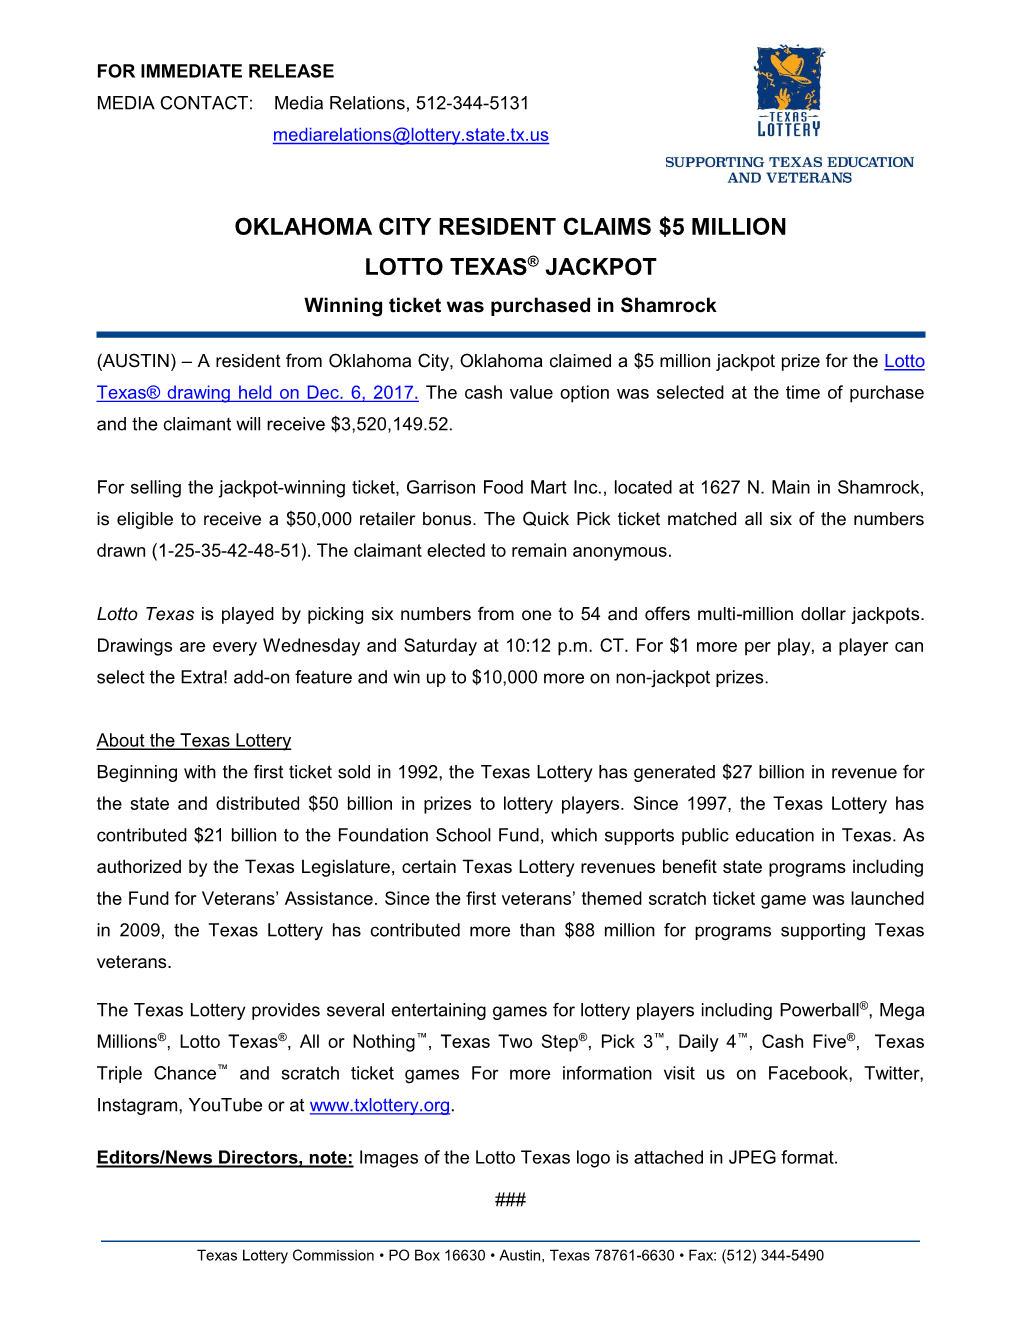 OKLAHOMA CITY RESIDENT CLAIMS $5 MILLION LOTTO TEXAS® JACKPOT Winning Ticket Was Purchased in Shamrock